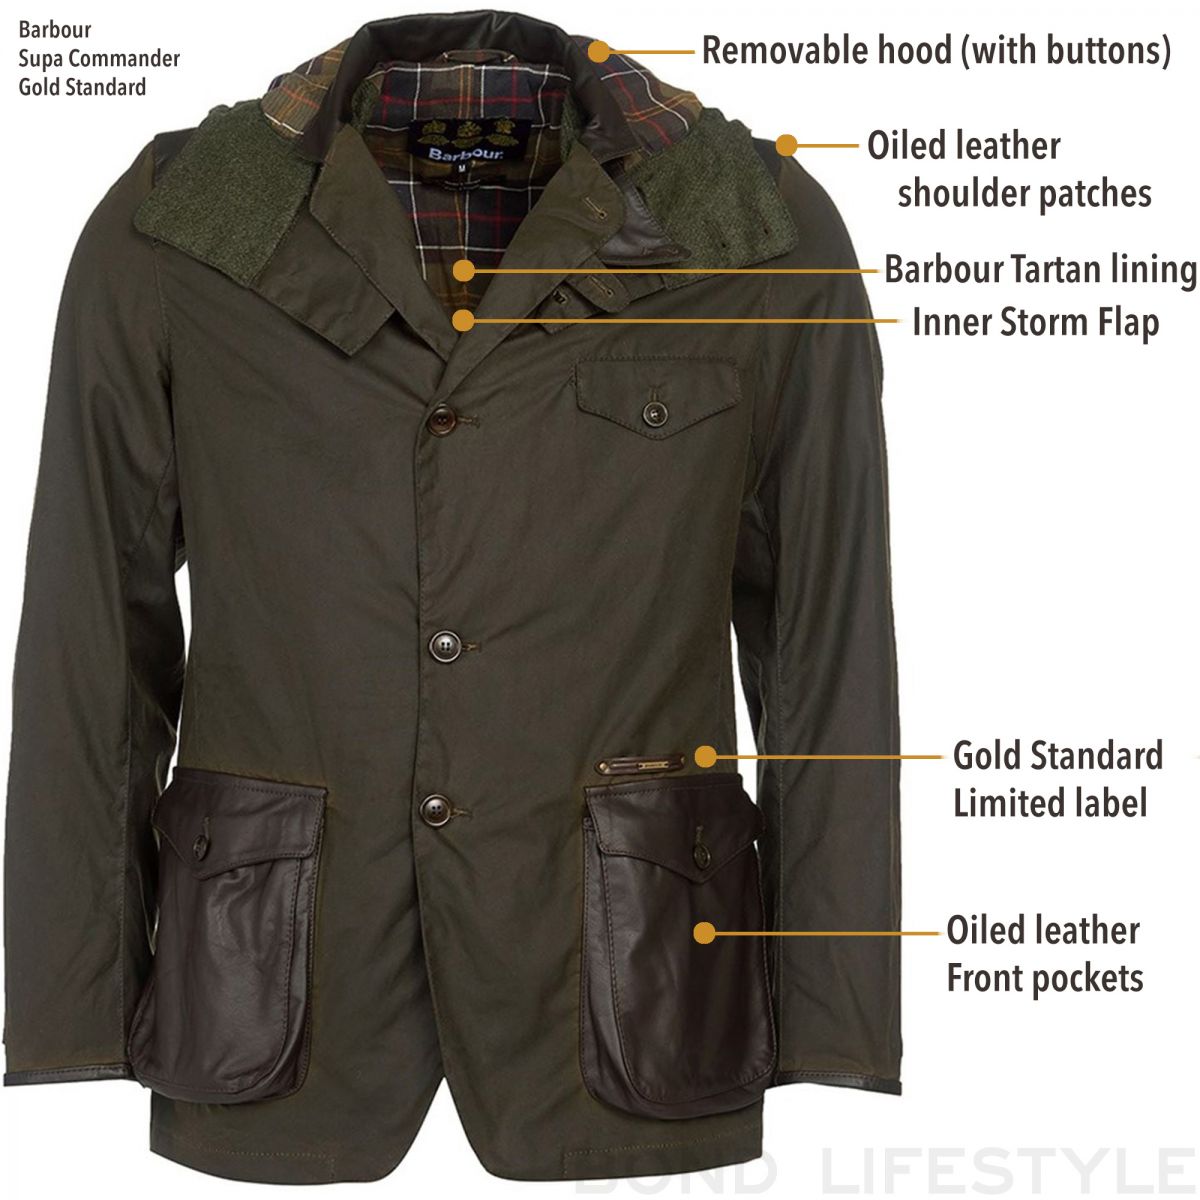 barbour commander jacket size guide